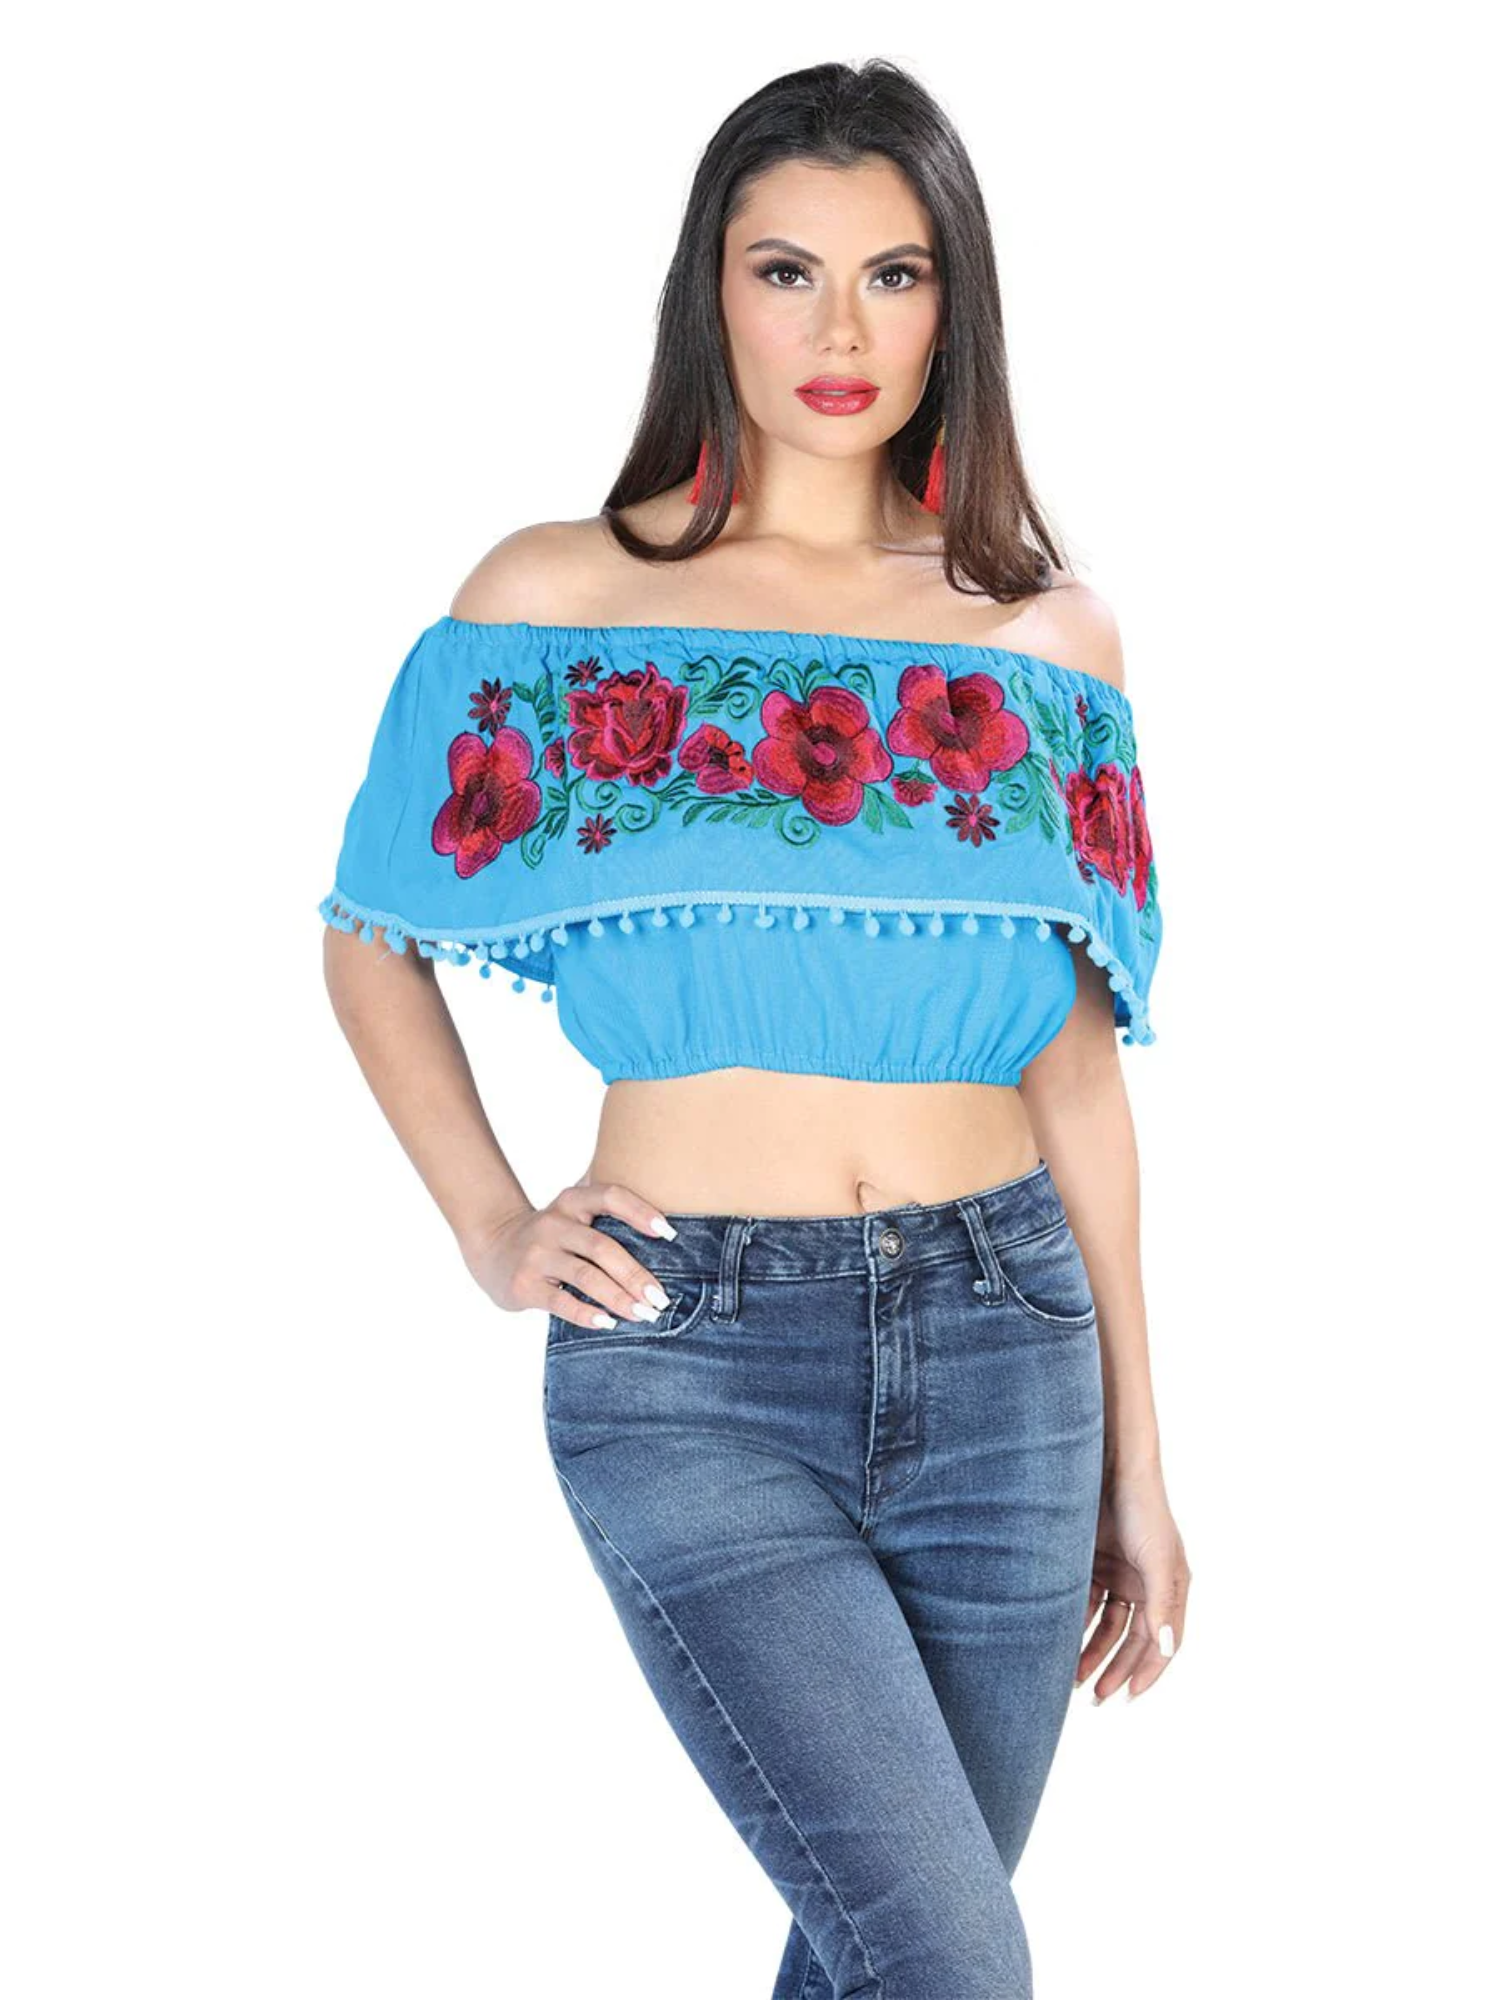 Blusa Corta Artesanal de Olan Bordada de Flores para Mujer Handmade Crop Top Mexico Artesanal Turquoise